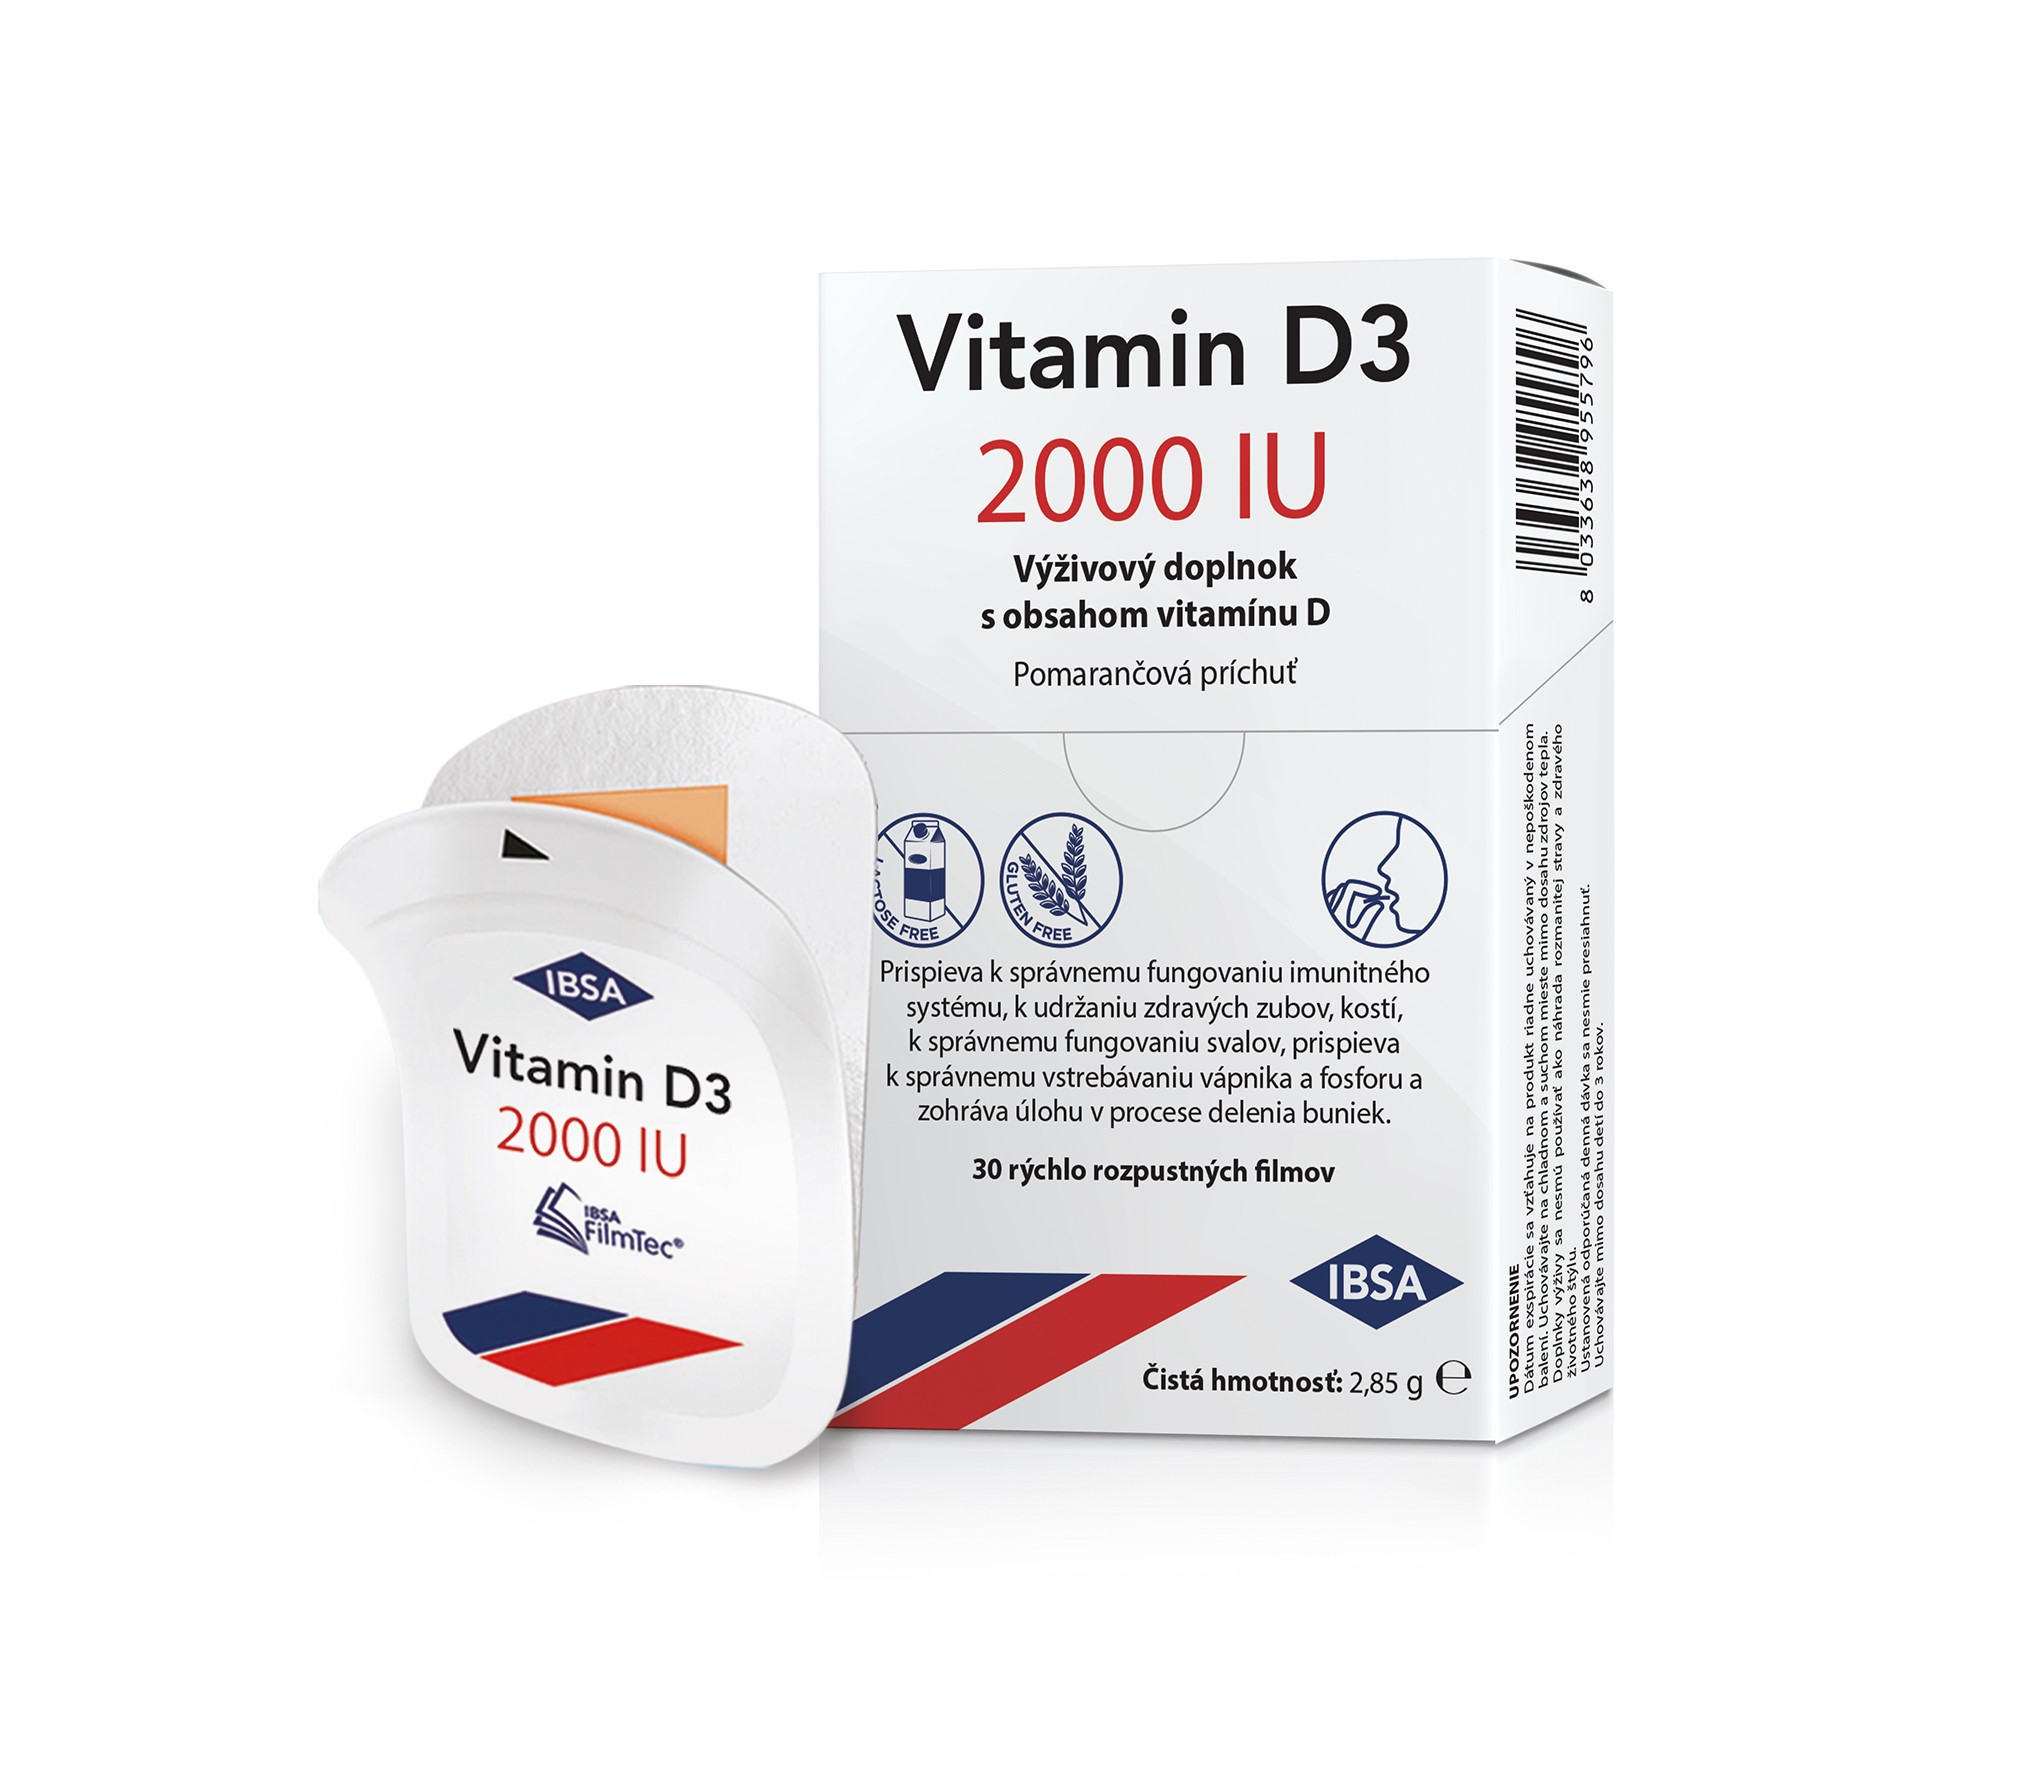 vitamin-D3-a-blister.jpg